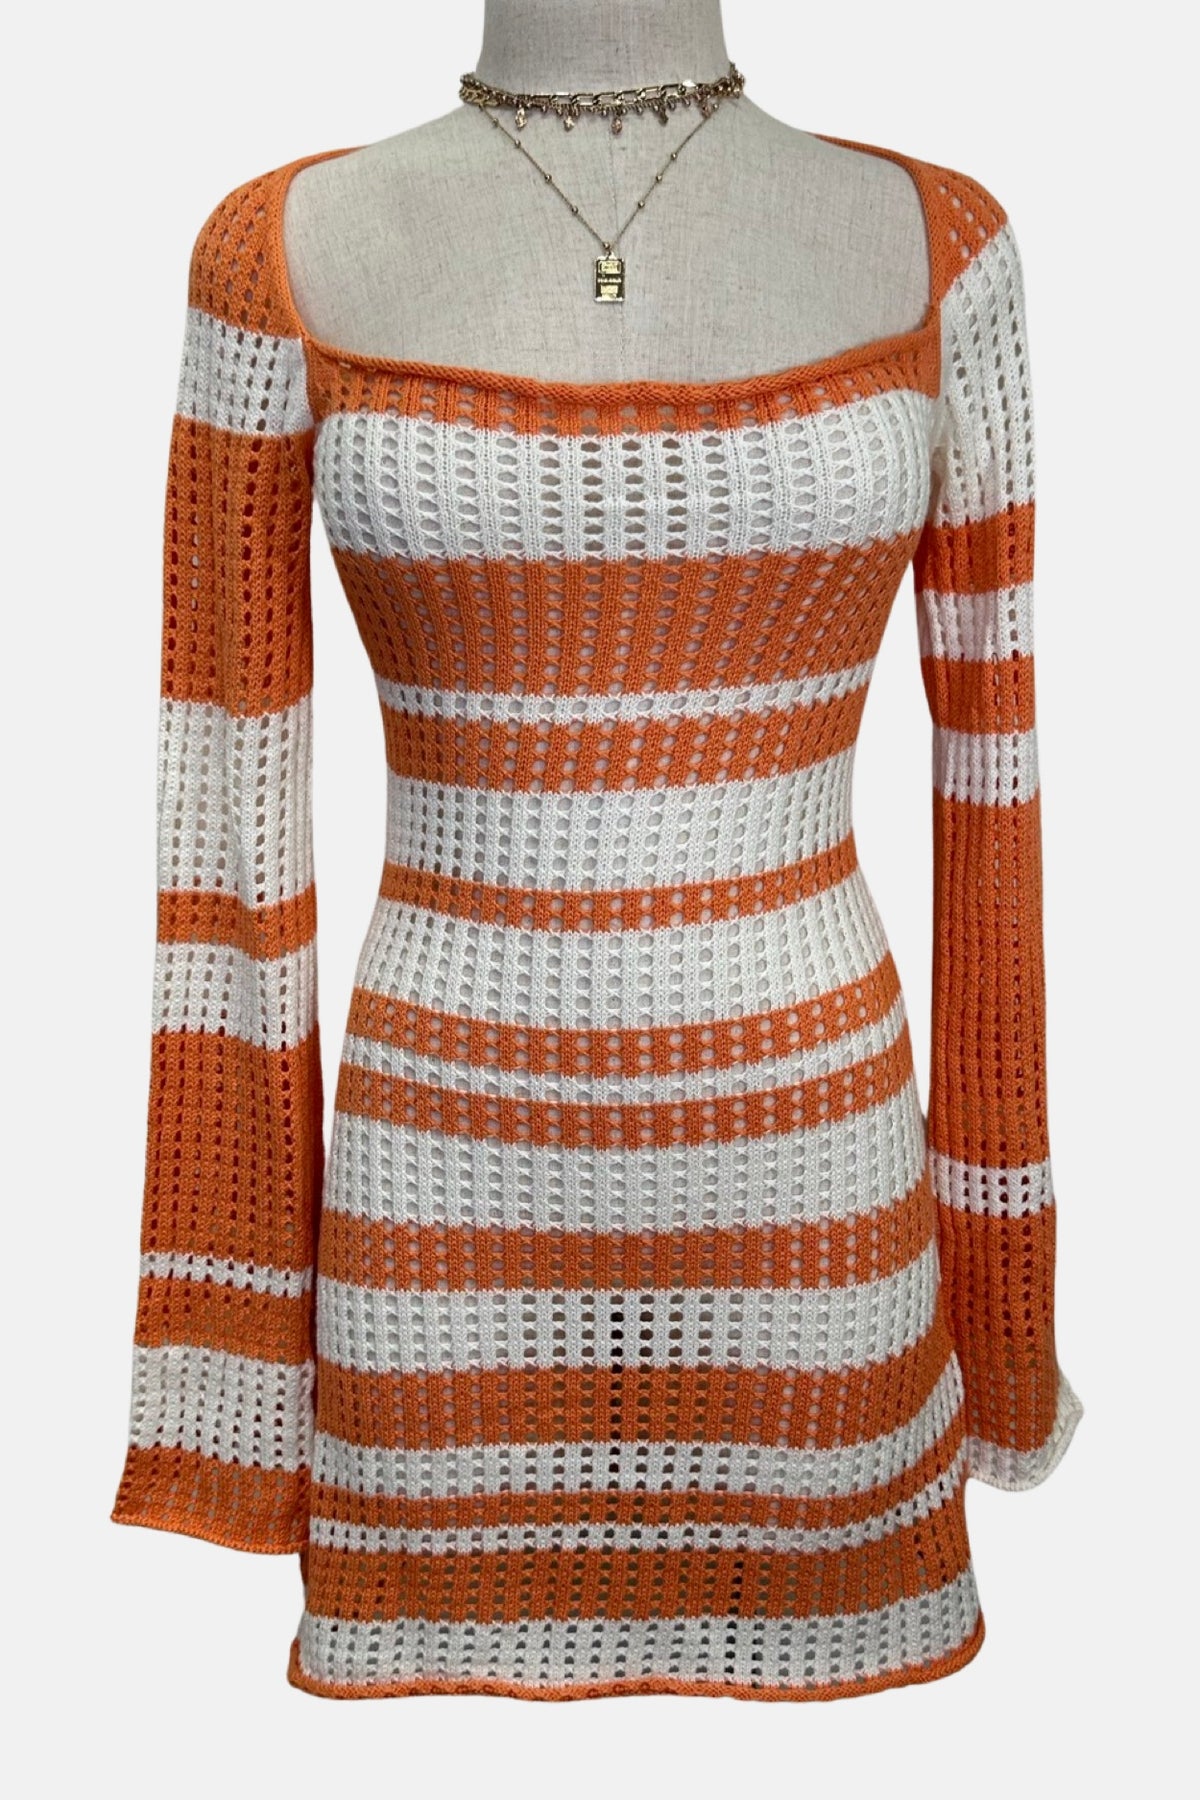 3428 | Crochet Mini Dress $22.50 Unit Price